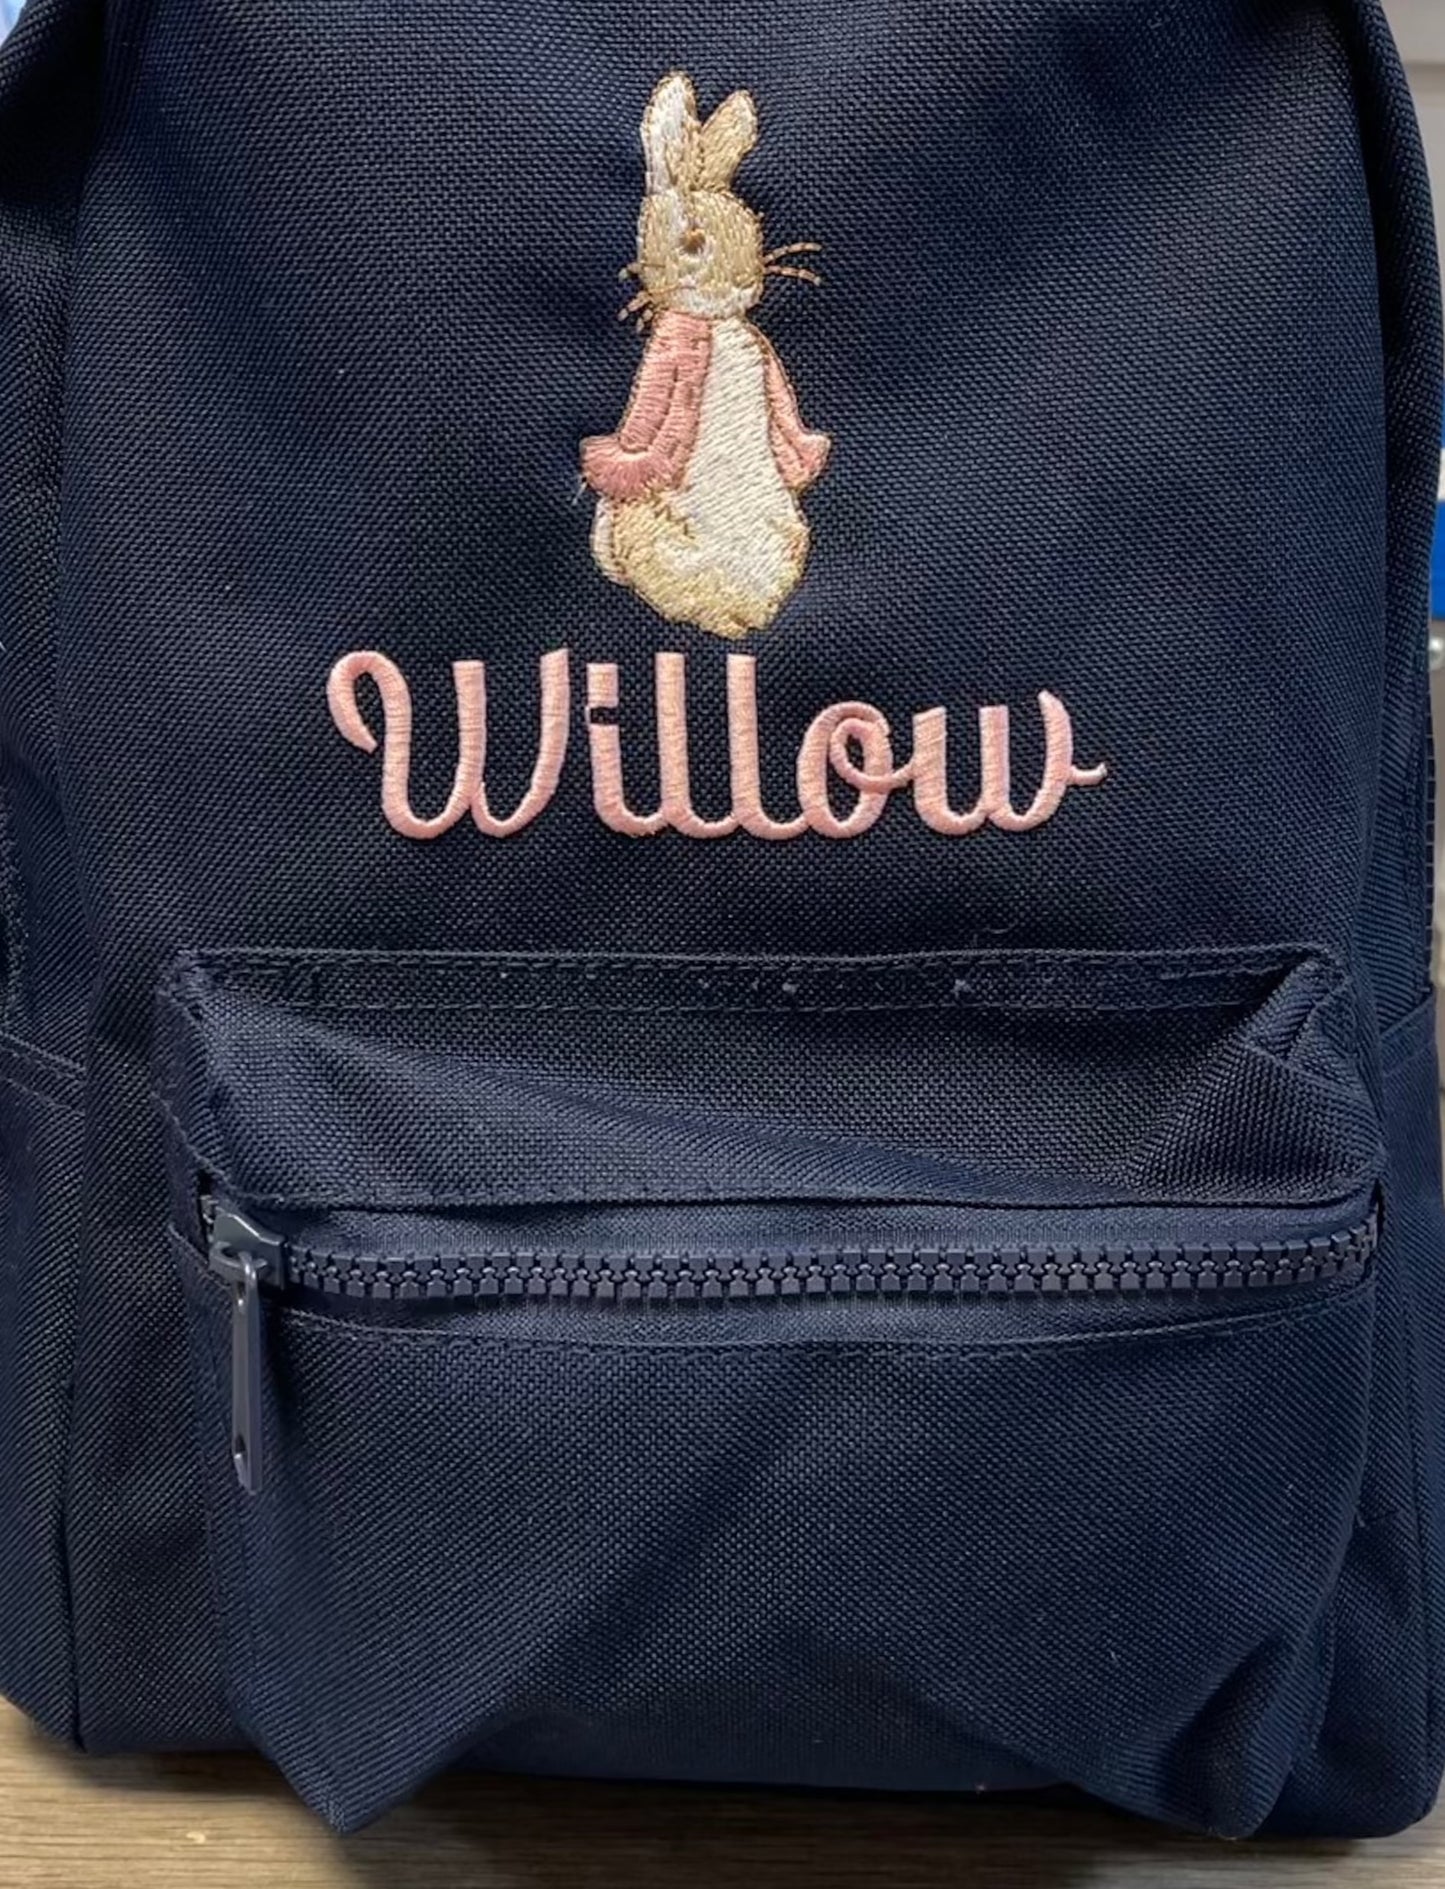 Personalised childrens backpack - Peter/Flopsy Rabbit design